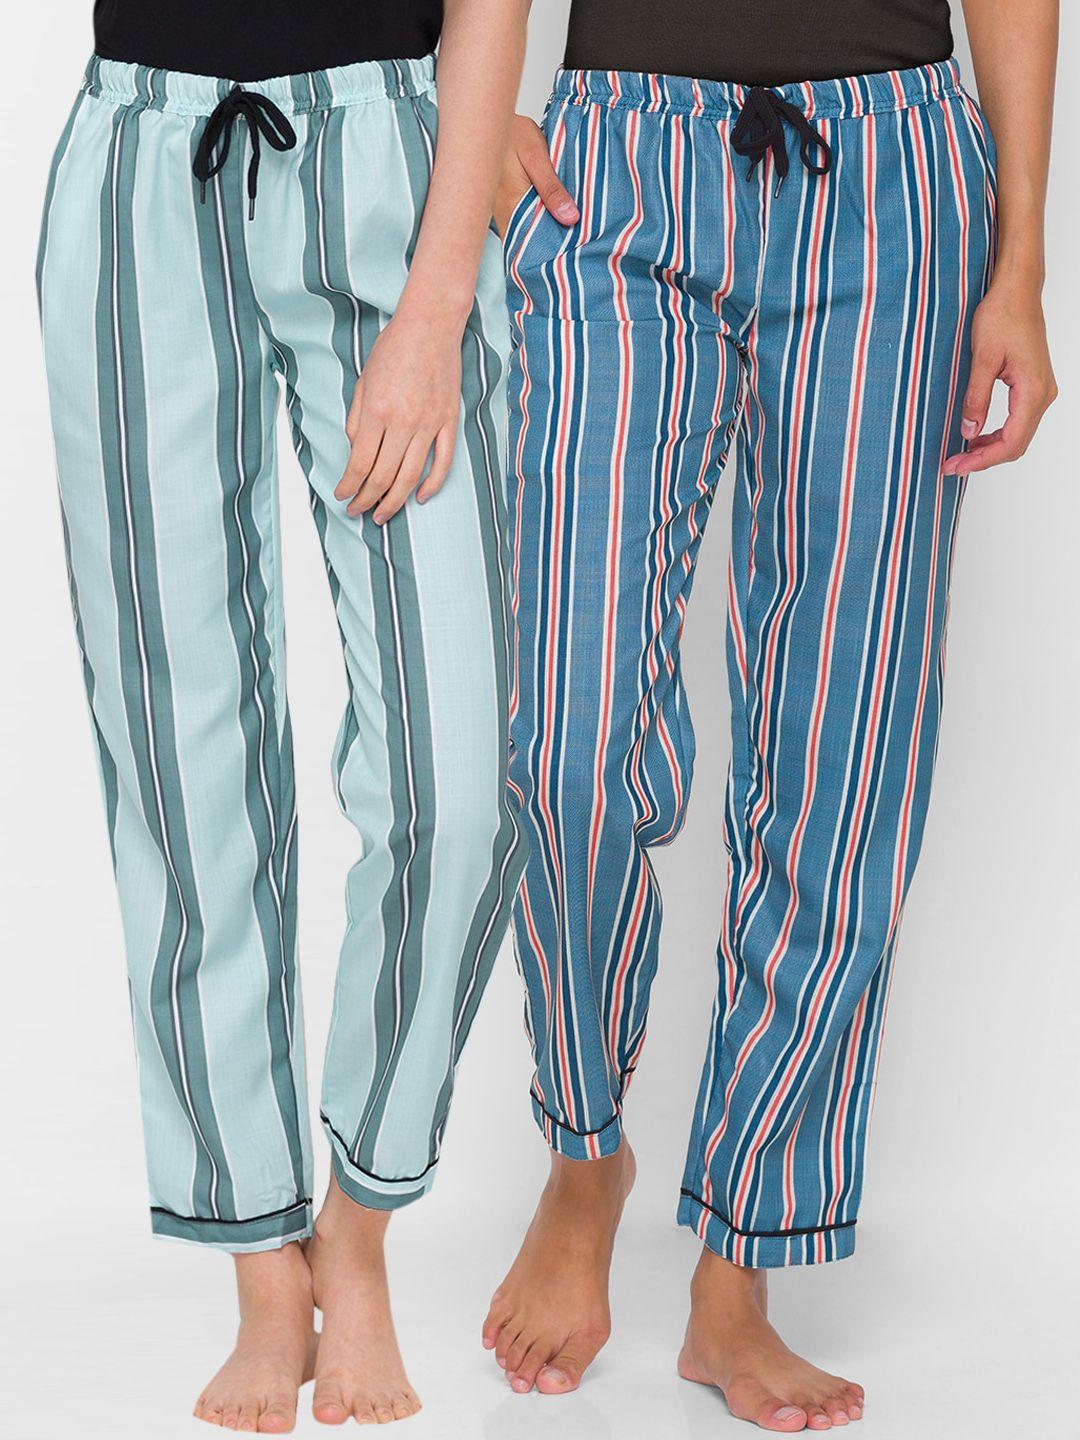 fashionrack pack of 2 women striped cotton lounge pants